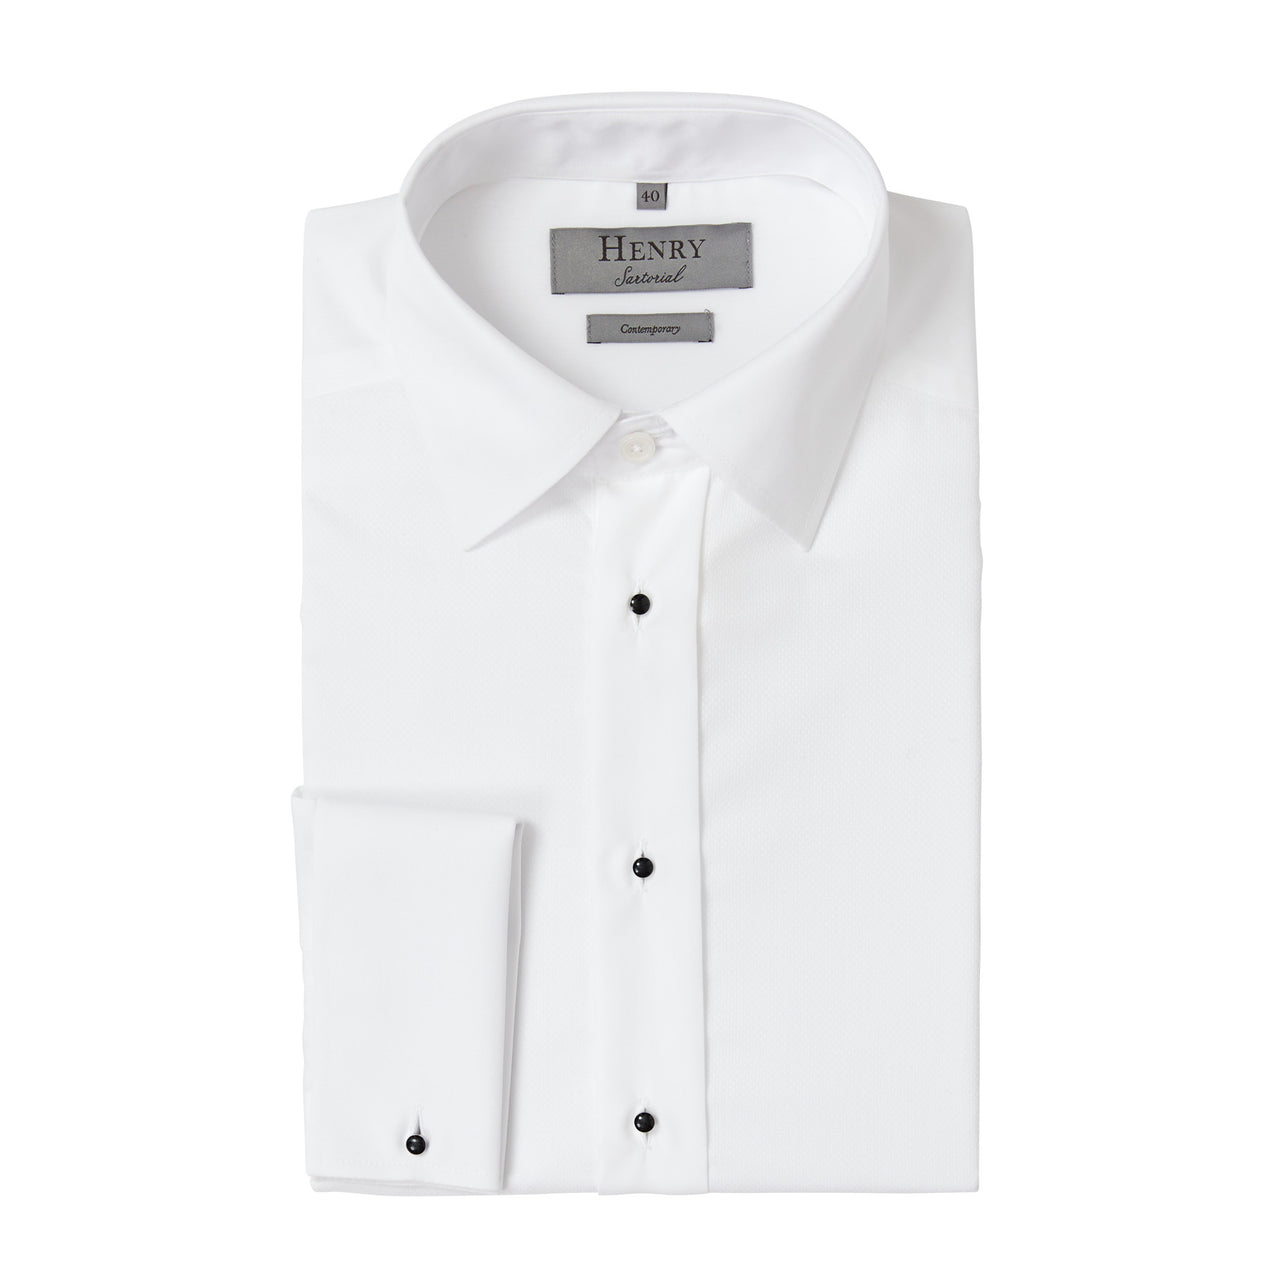 HENRY SARTORIAL Dinner Shirt Double Cufflink WHITE